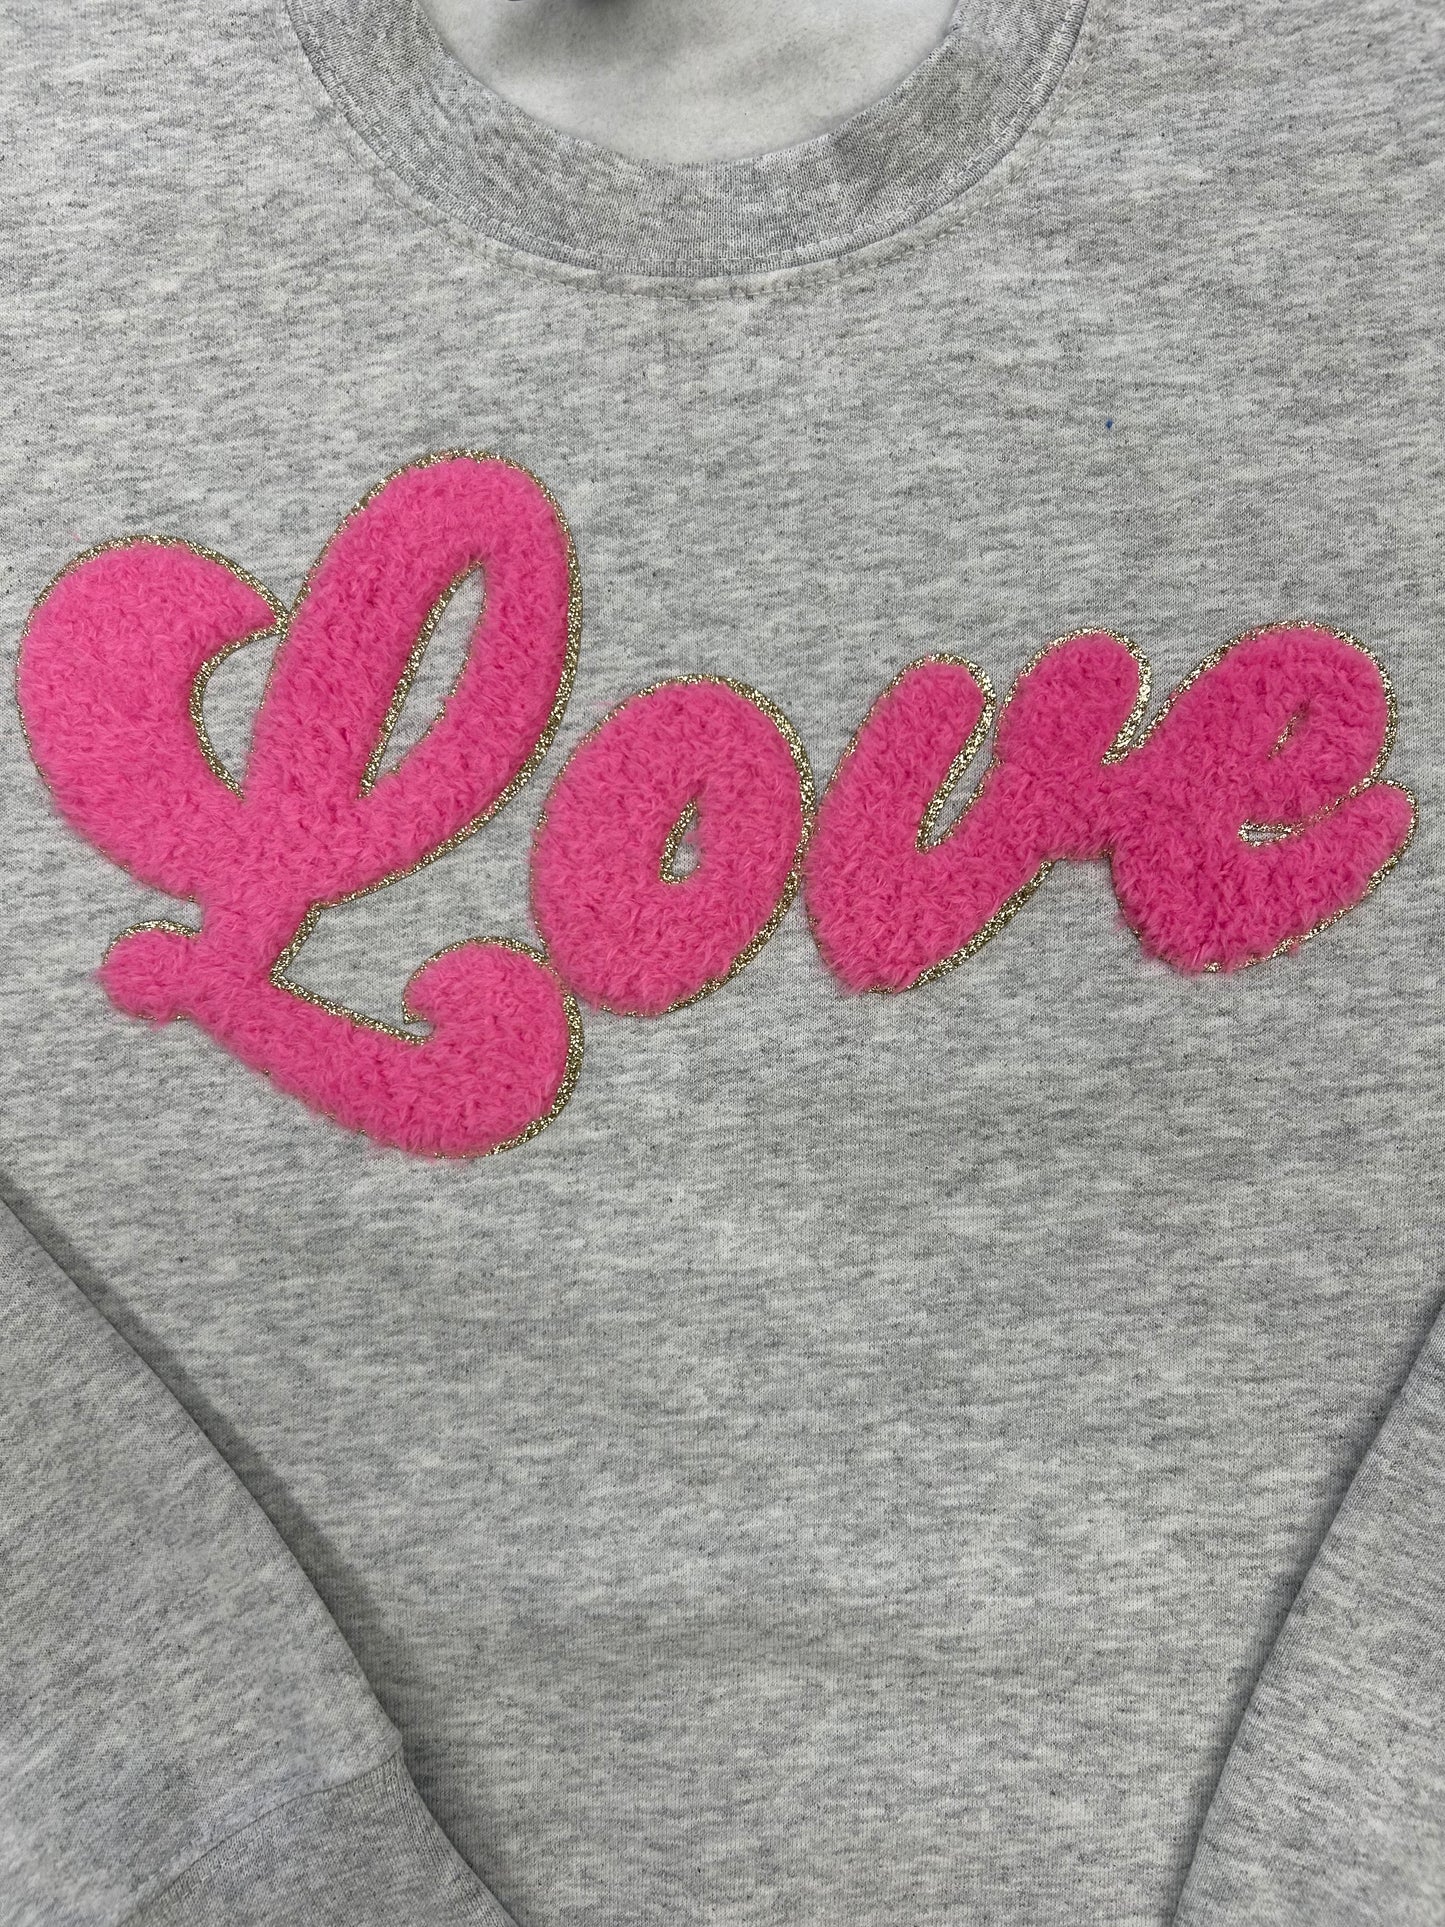 Pink Love Puffy Letter Crew Neck Sweatshirt With Gold Trim - Grey